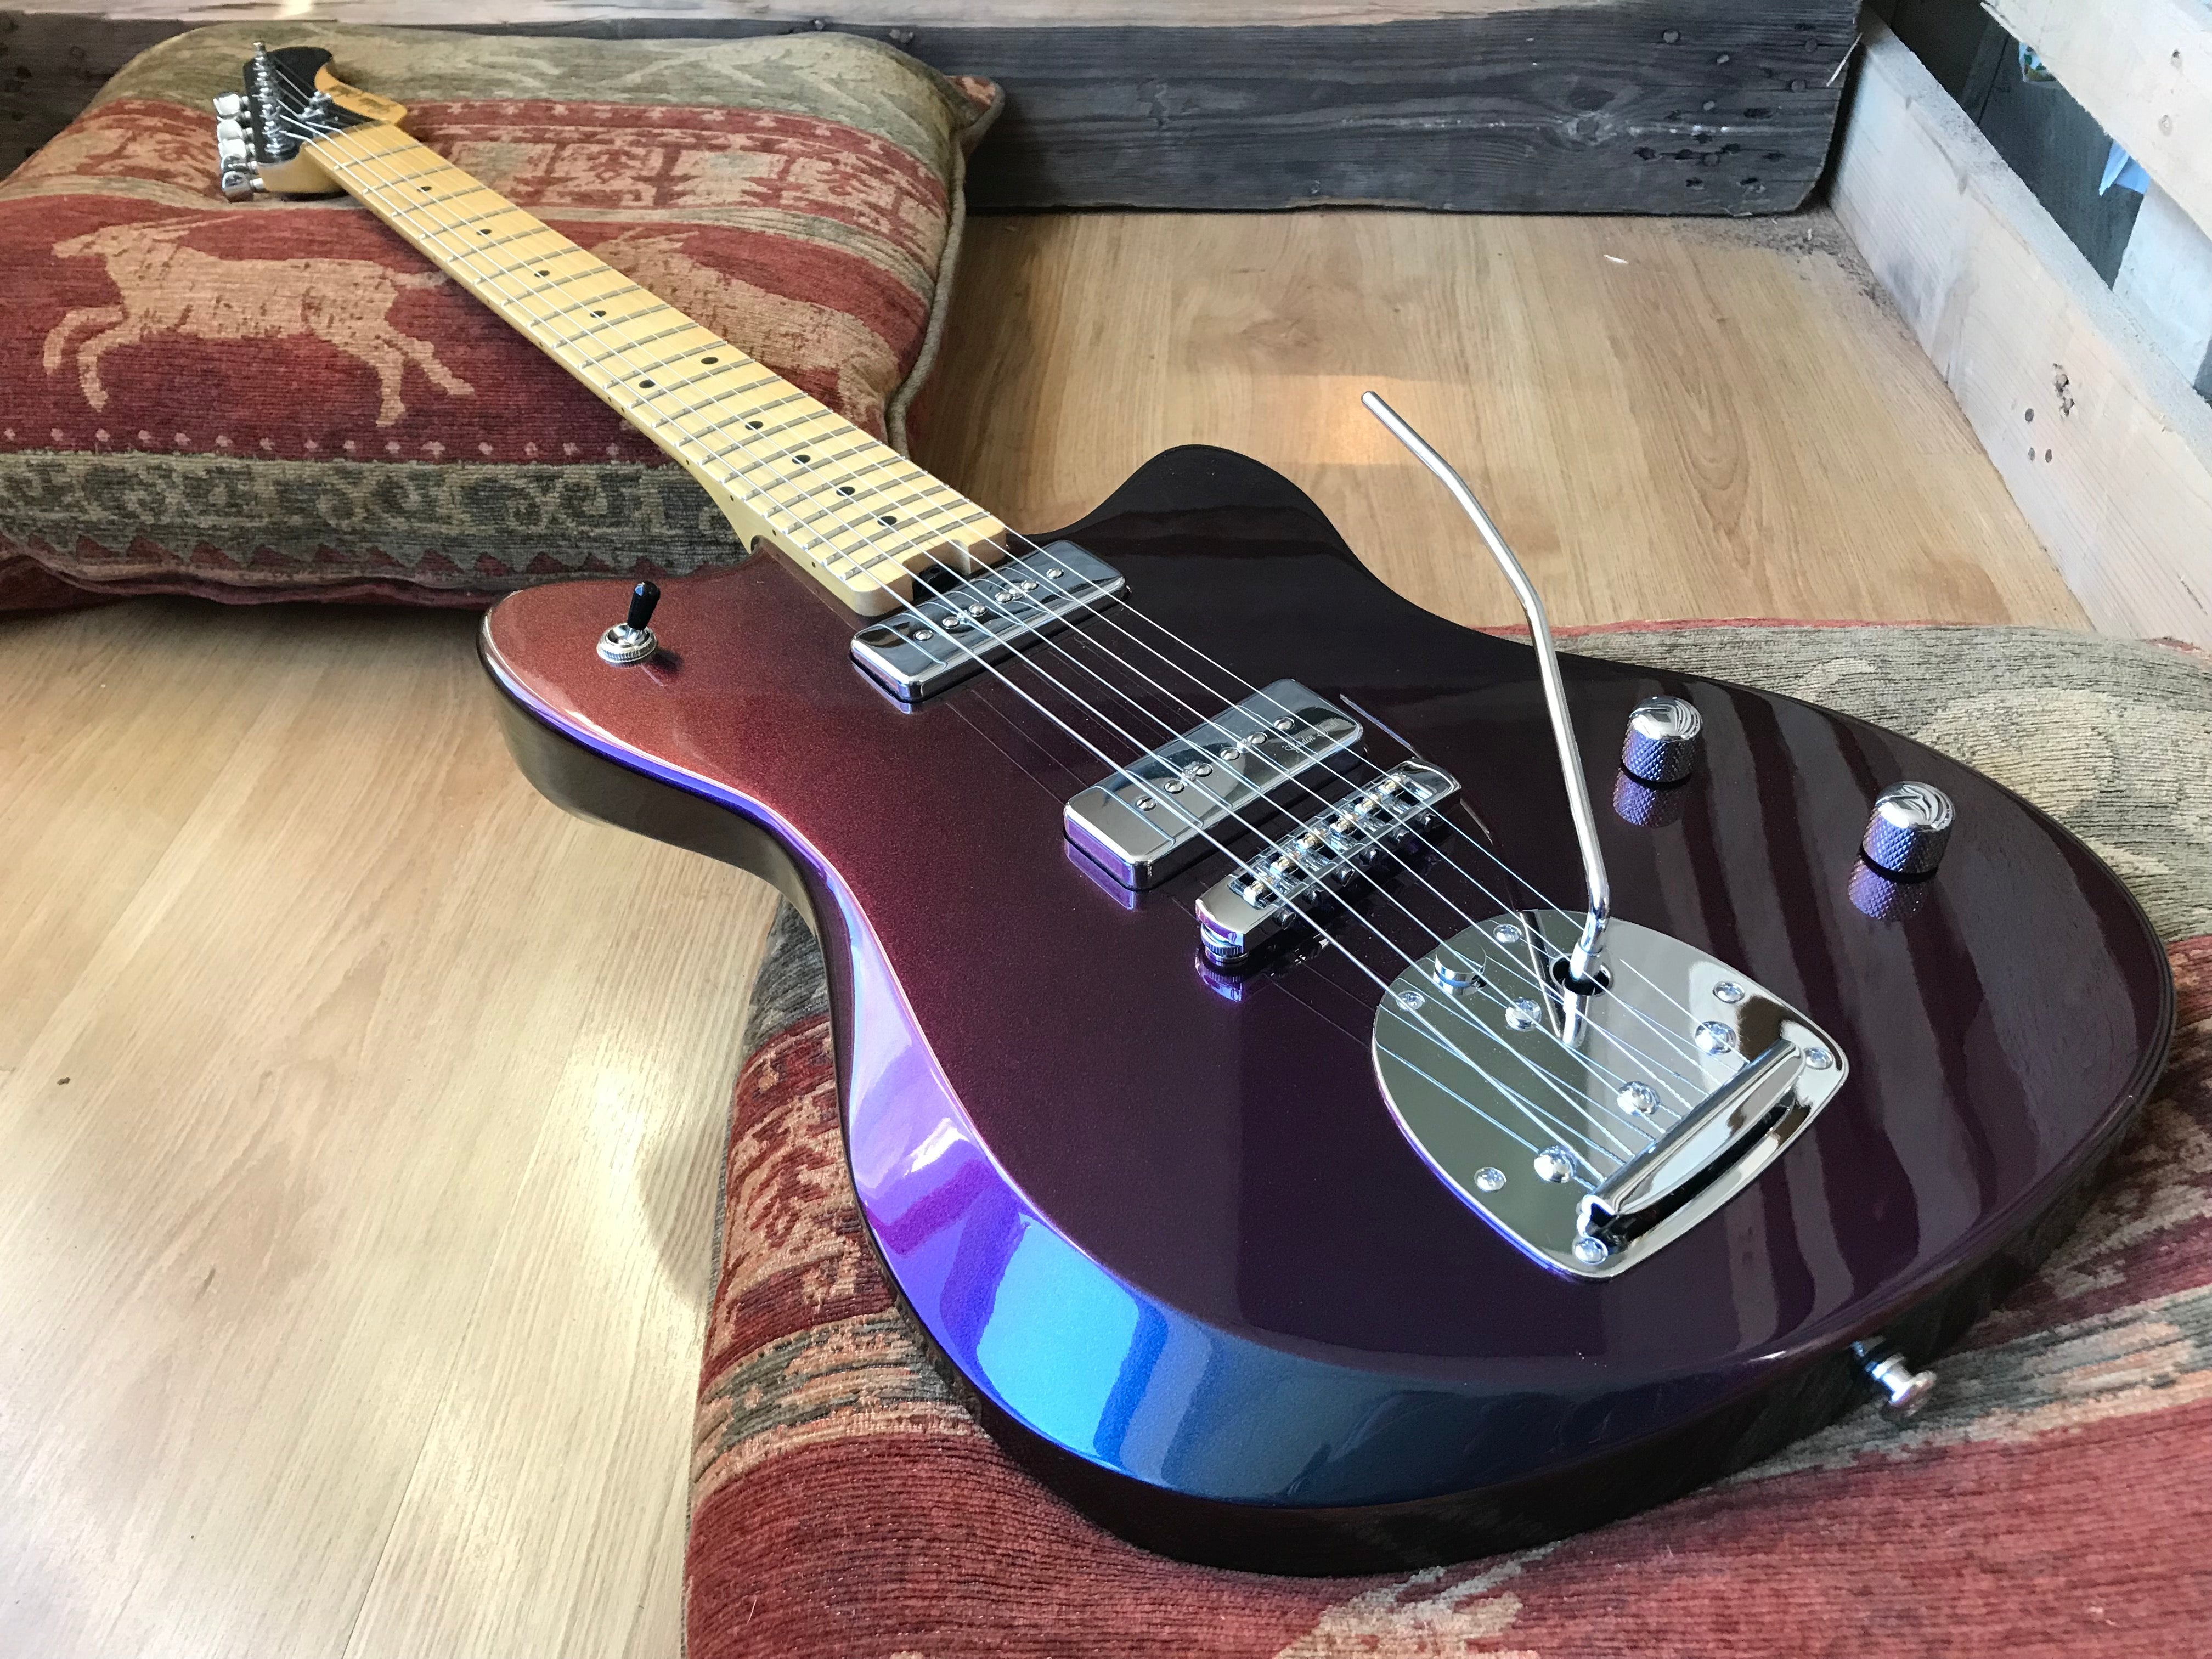 Gordon Smith Gatsby Iridescent Custom, Electric Guitar for sale at Richards Guitars.